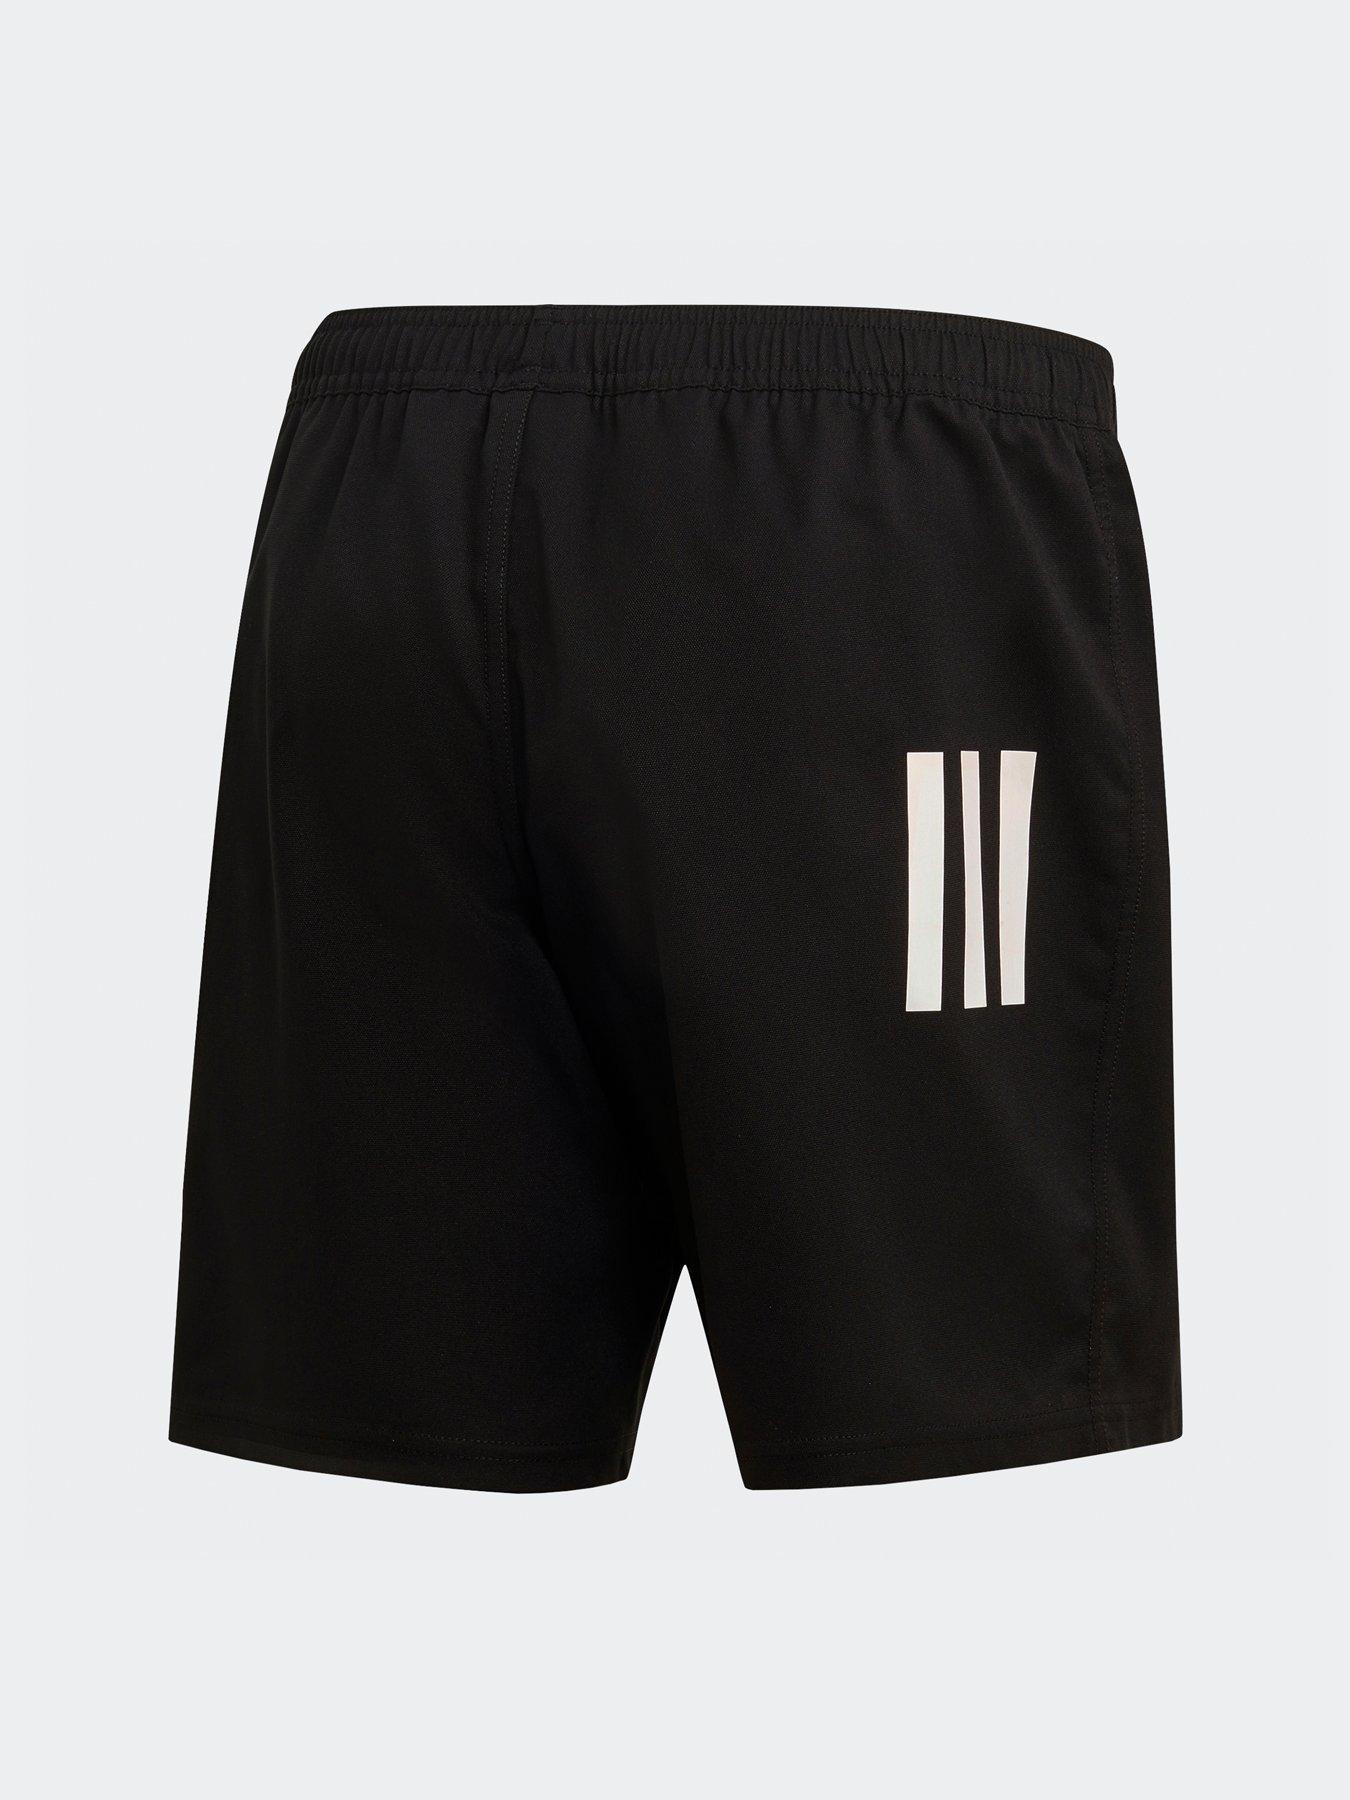  3-stripes Shorts